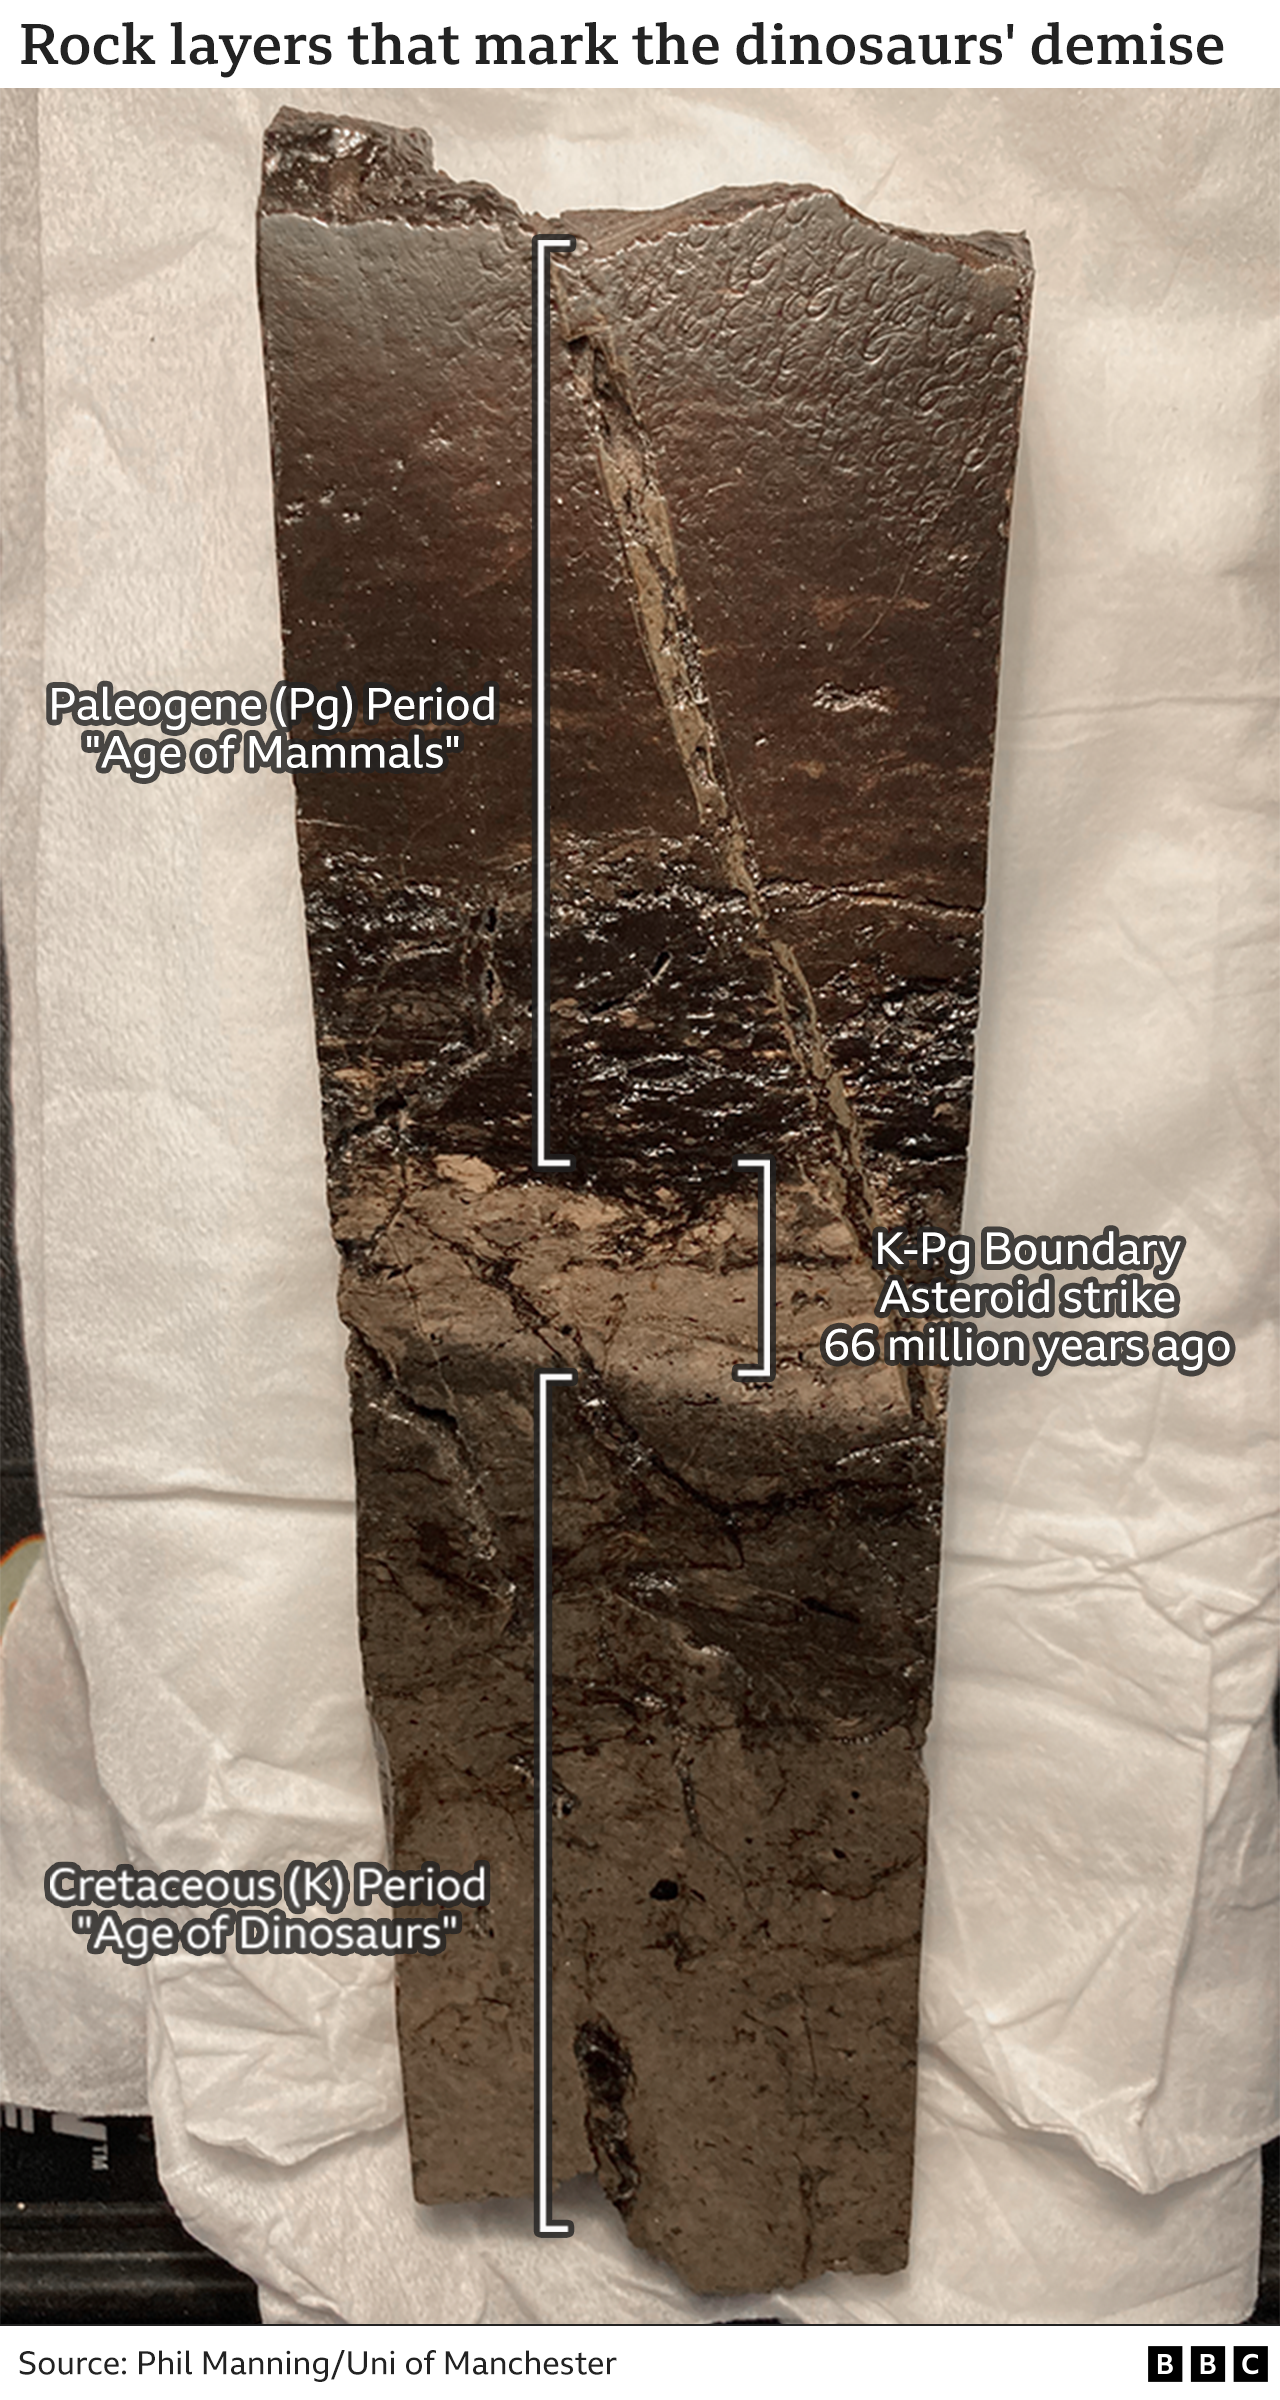 K-Pg boundary rock layers (Tanis)